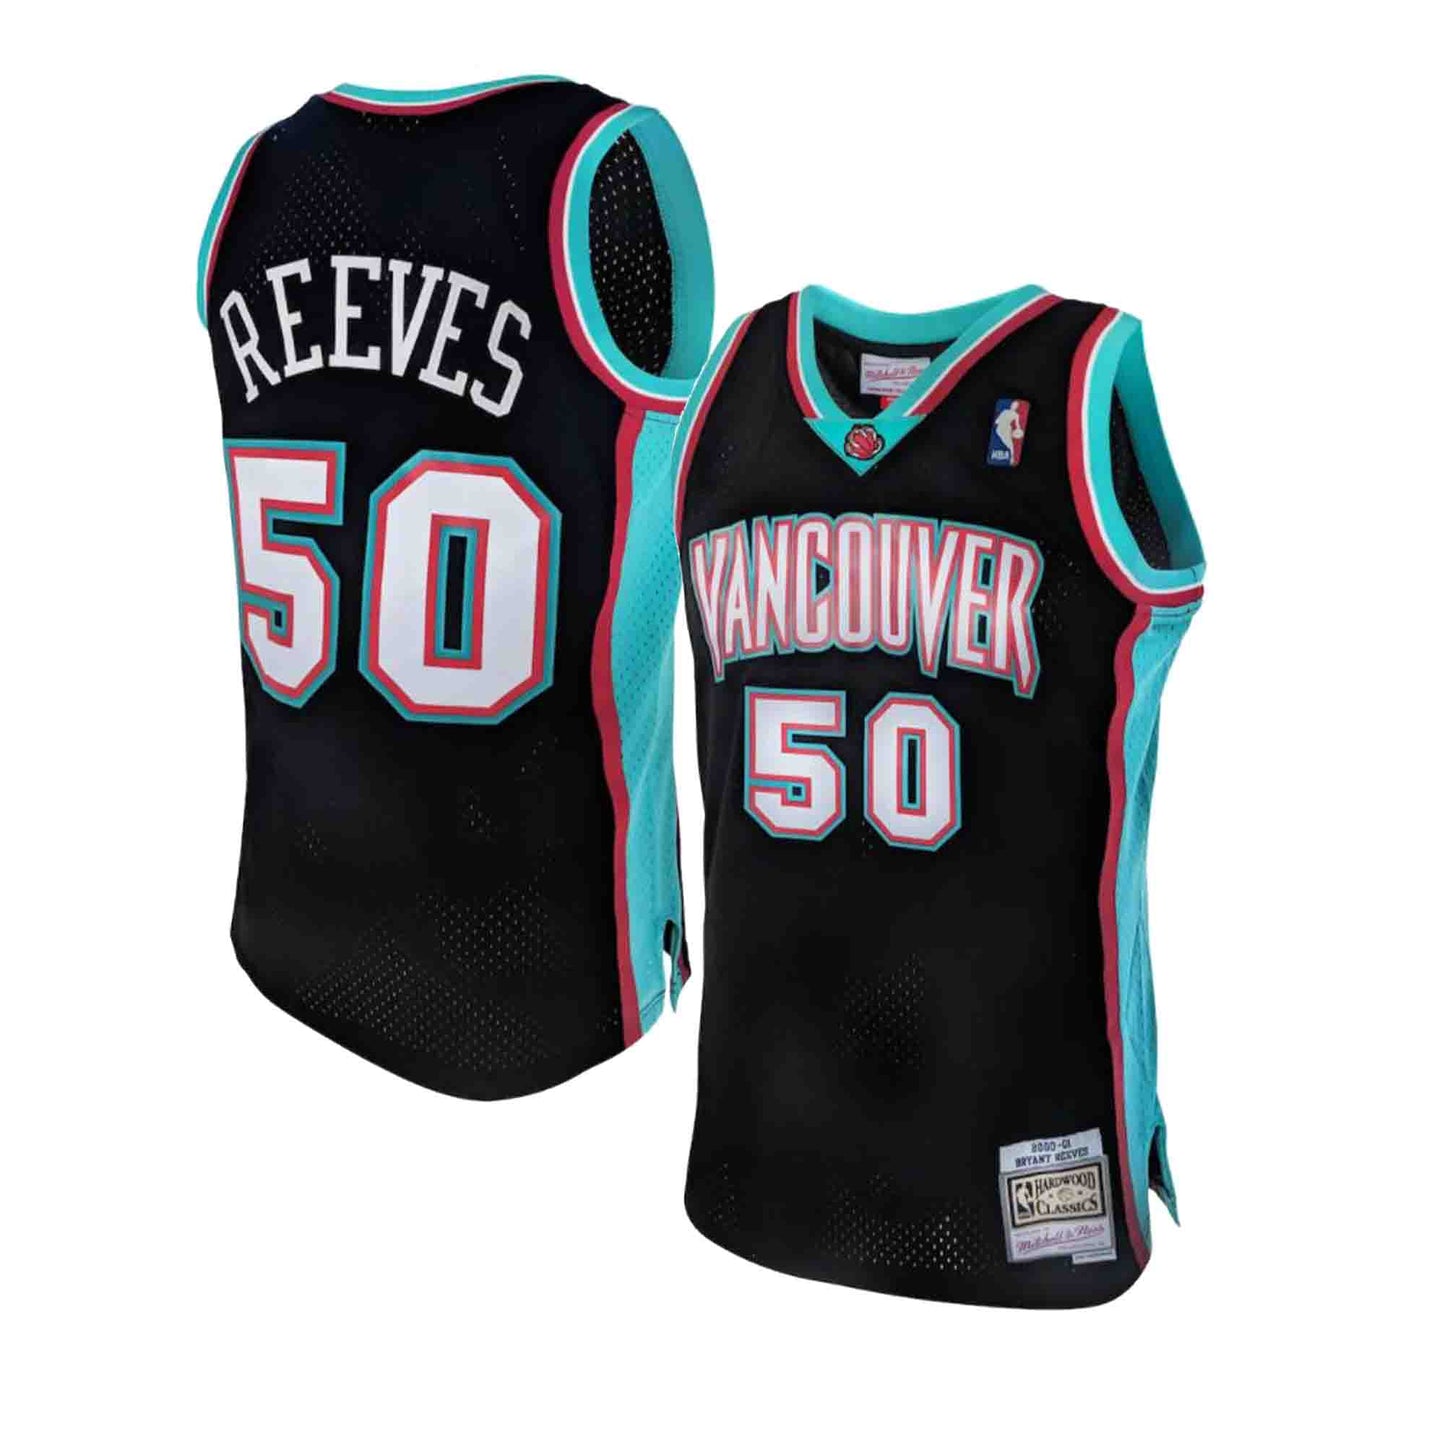 Sb-roscoffShops - Mitchell & Ness Men NBA Vancouver Grizzlies Swingman Jersey  Bryant Reeves Black